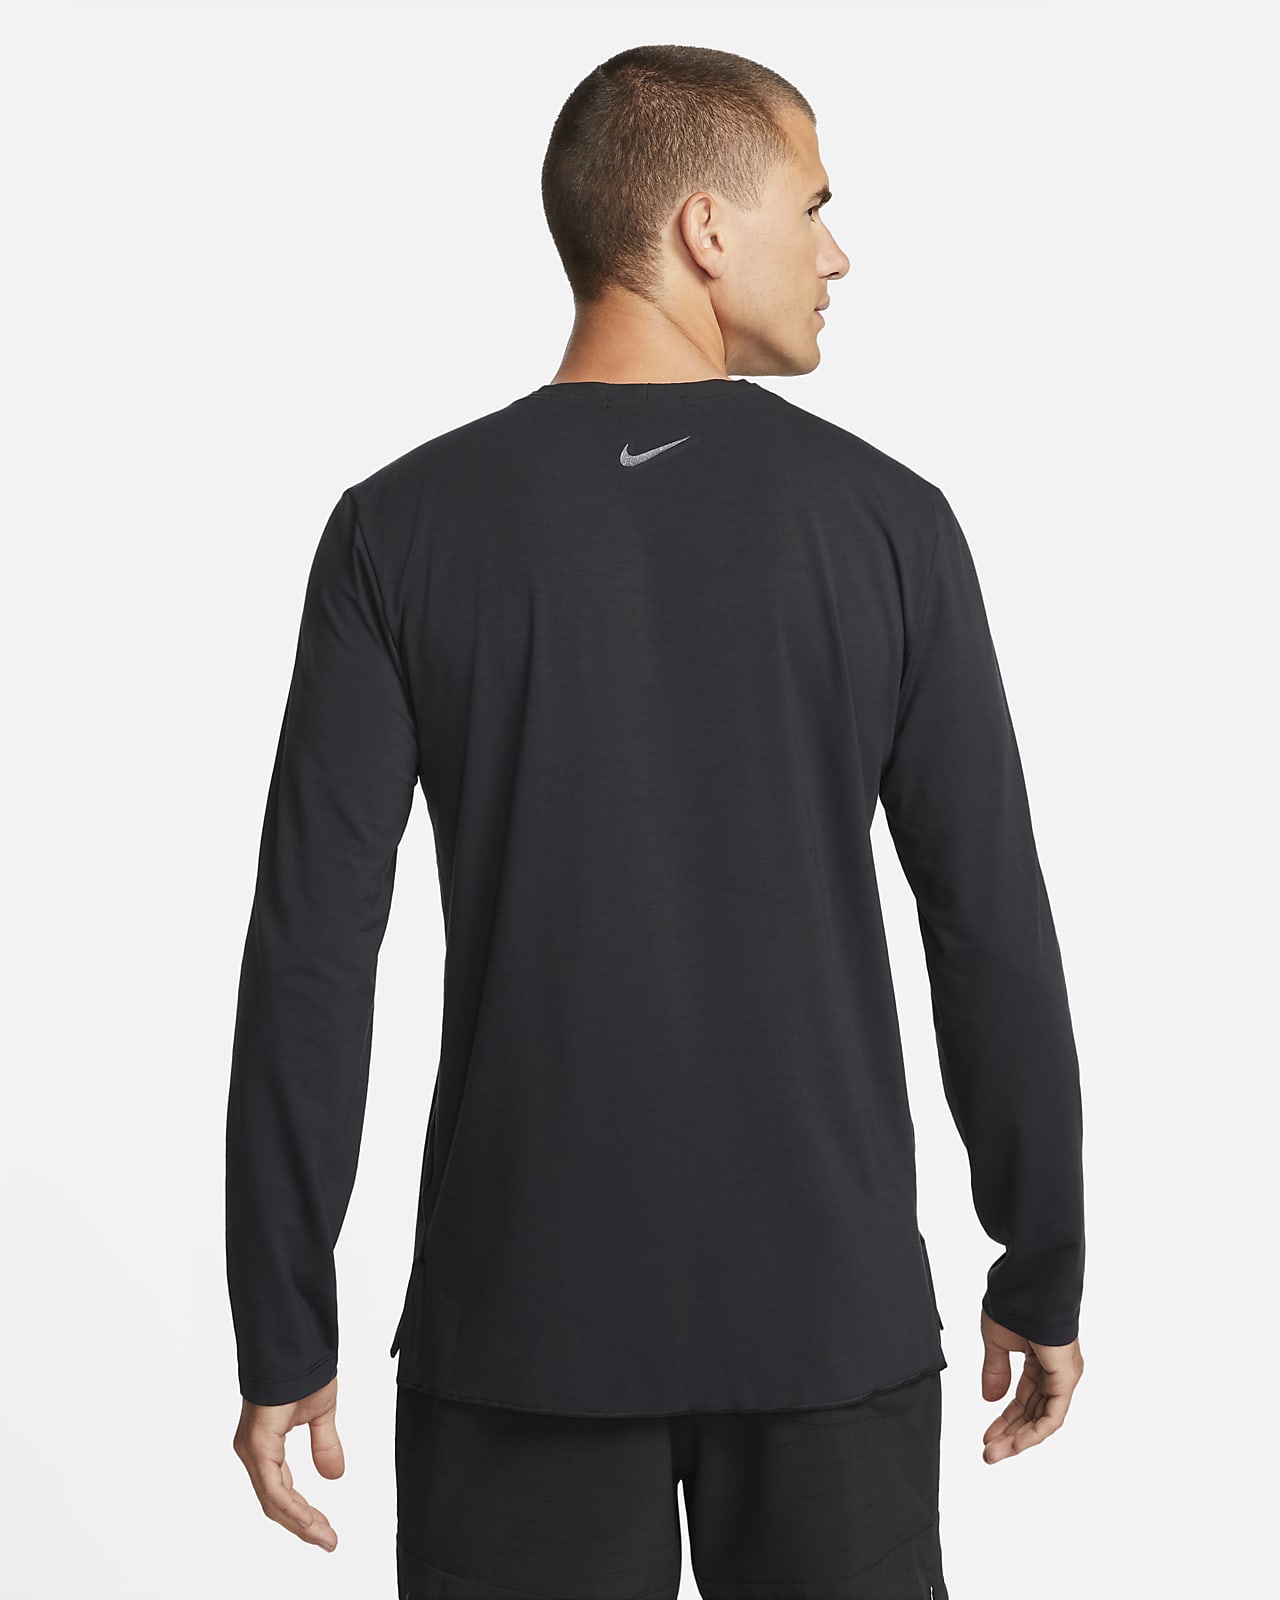 Nike Dri-FIT Yoga Men's Long-Sleeve Top.